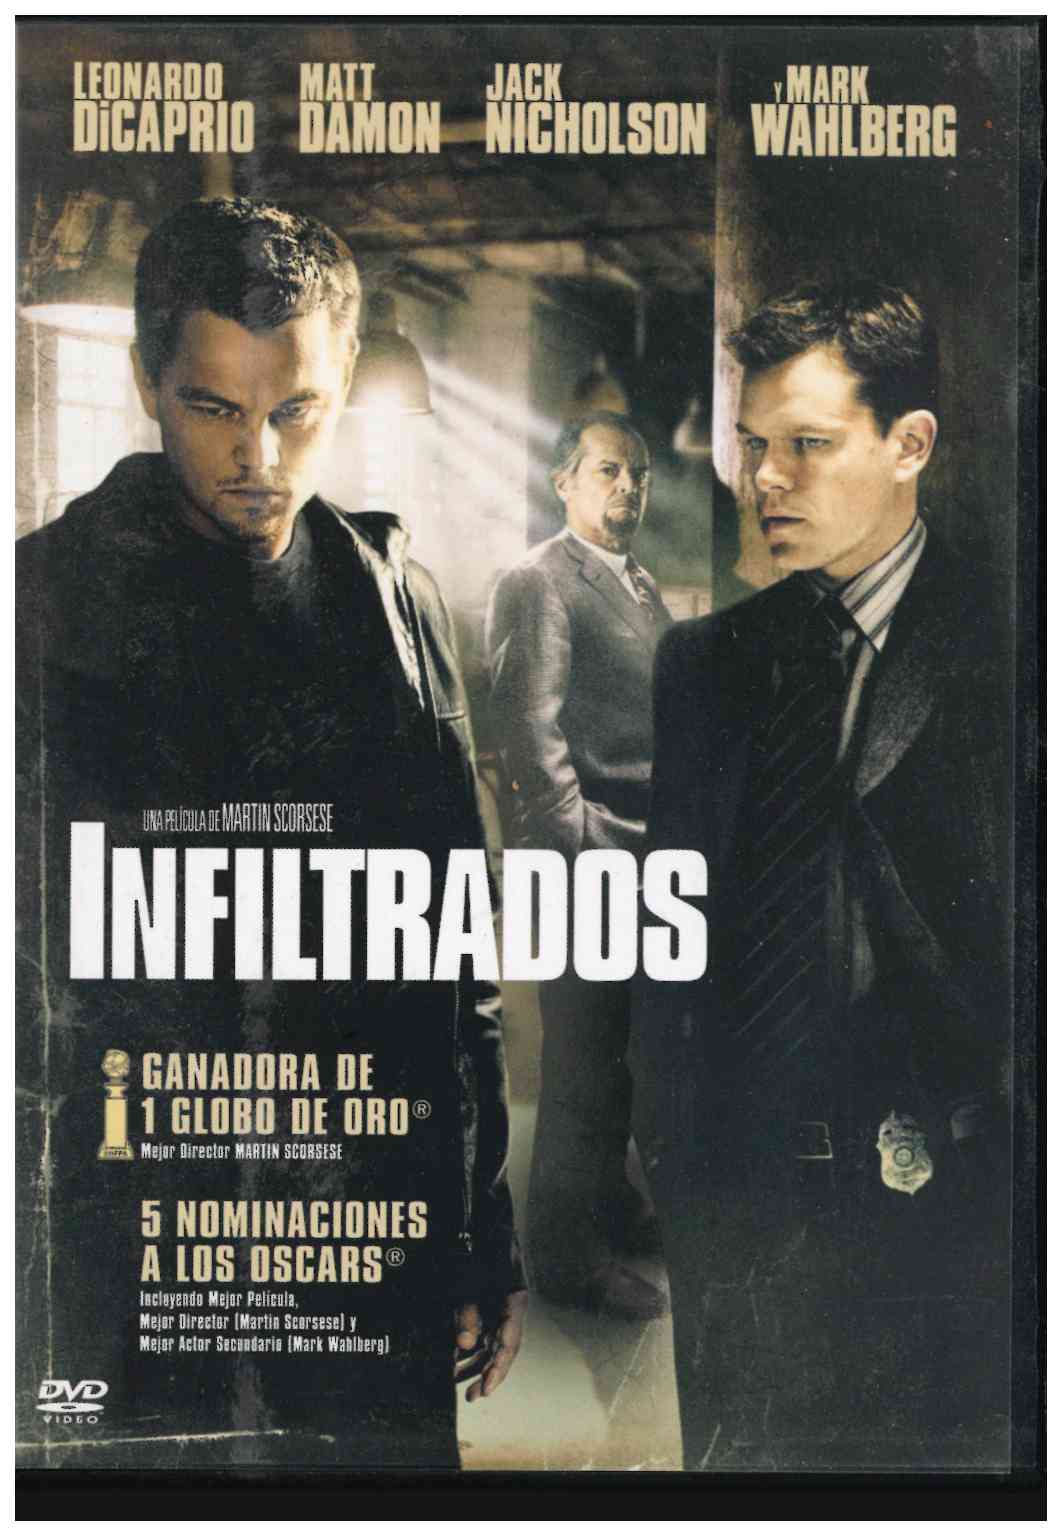 Infiltrados. WB 2006. Leonardo DiCaprio, Matt Damon, Jack Nicholson y Mark Wahlberg